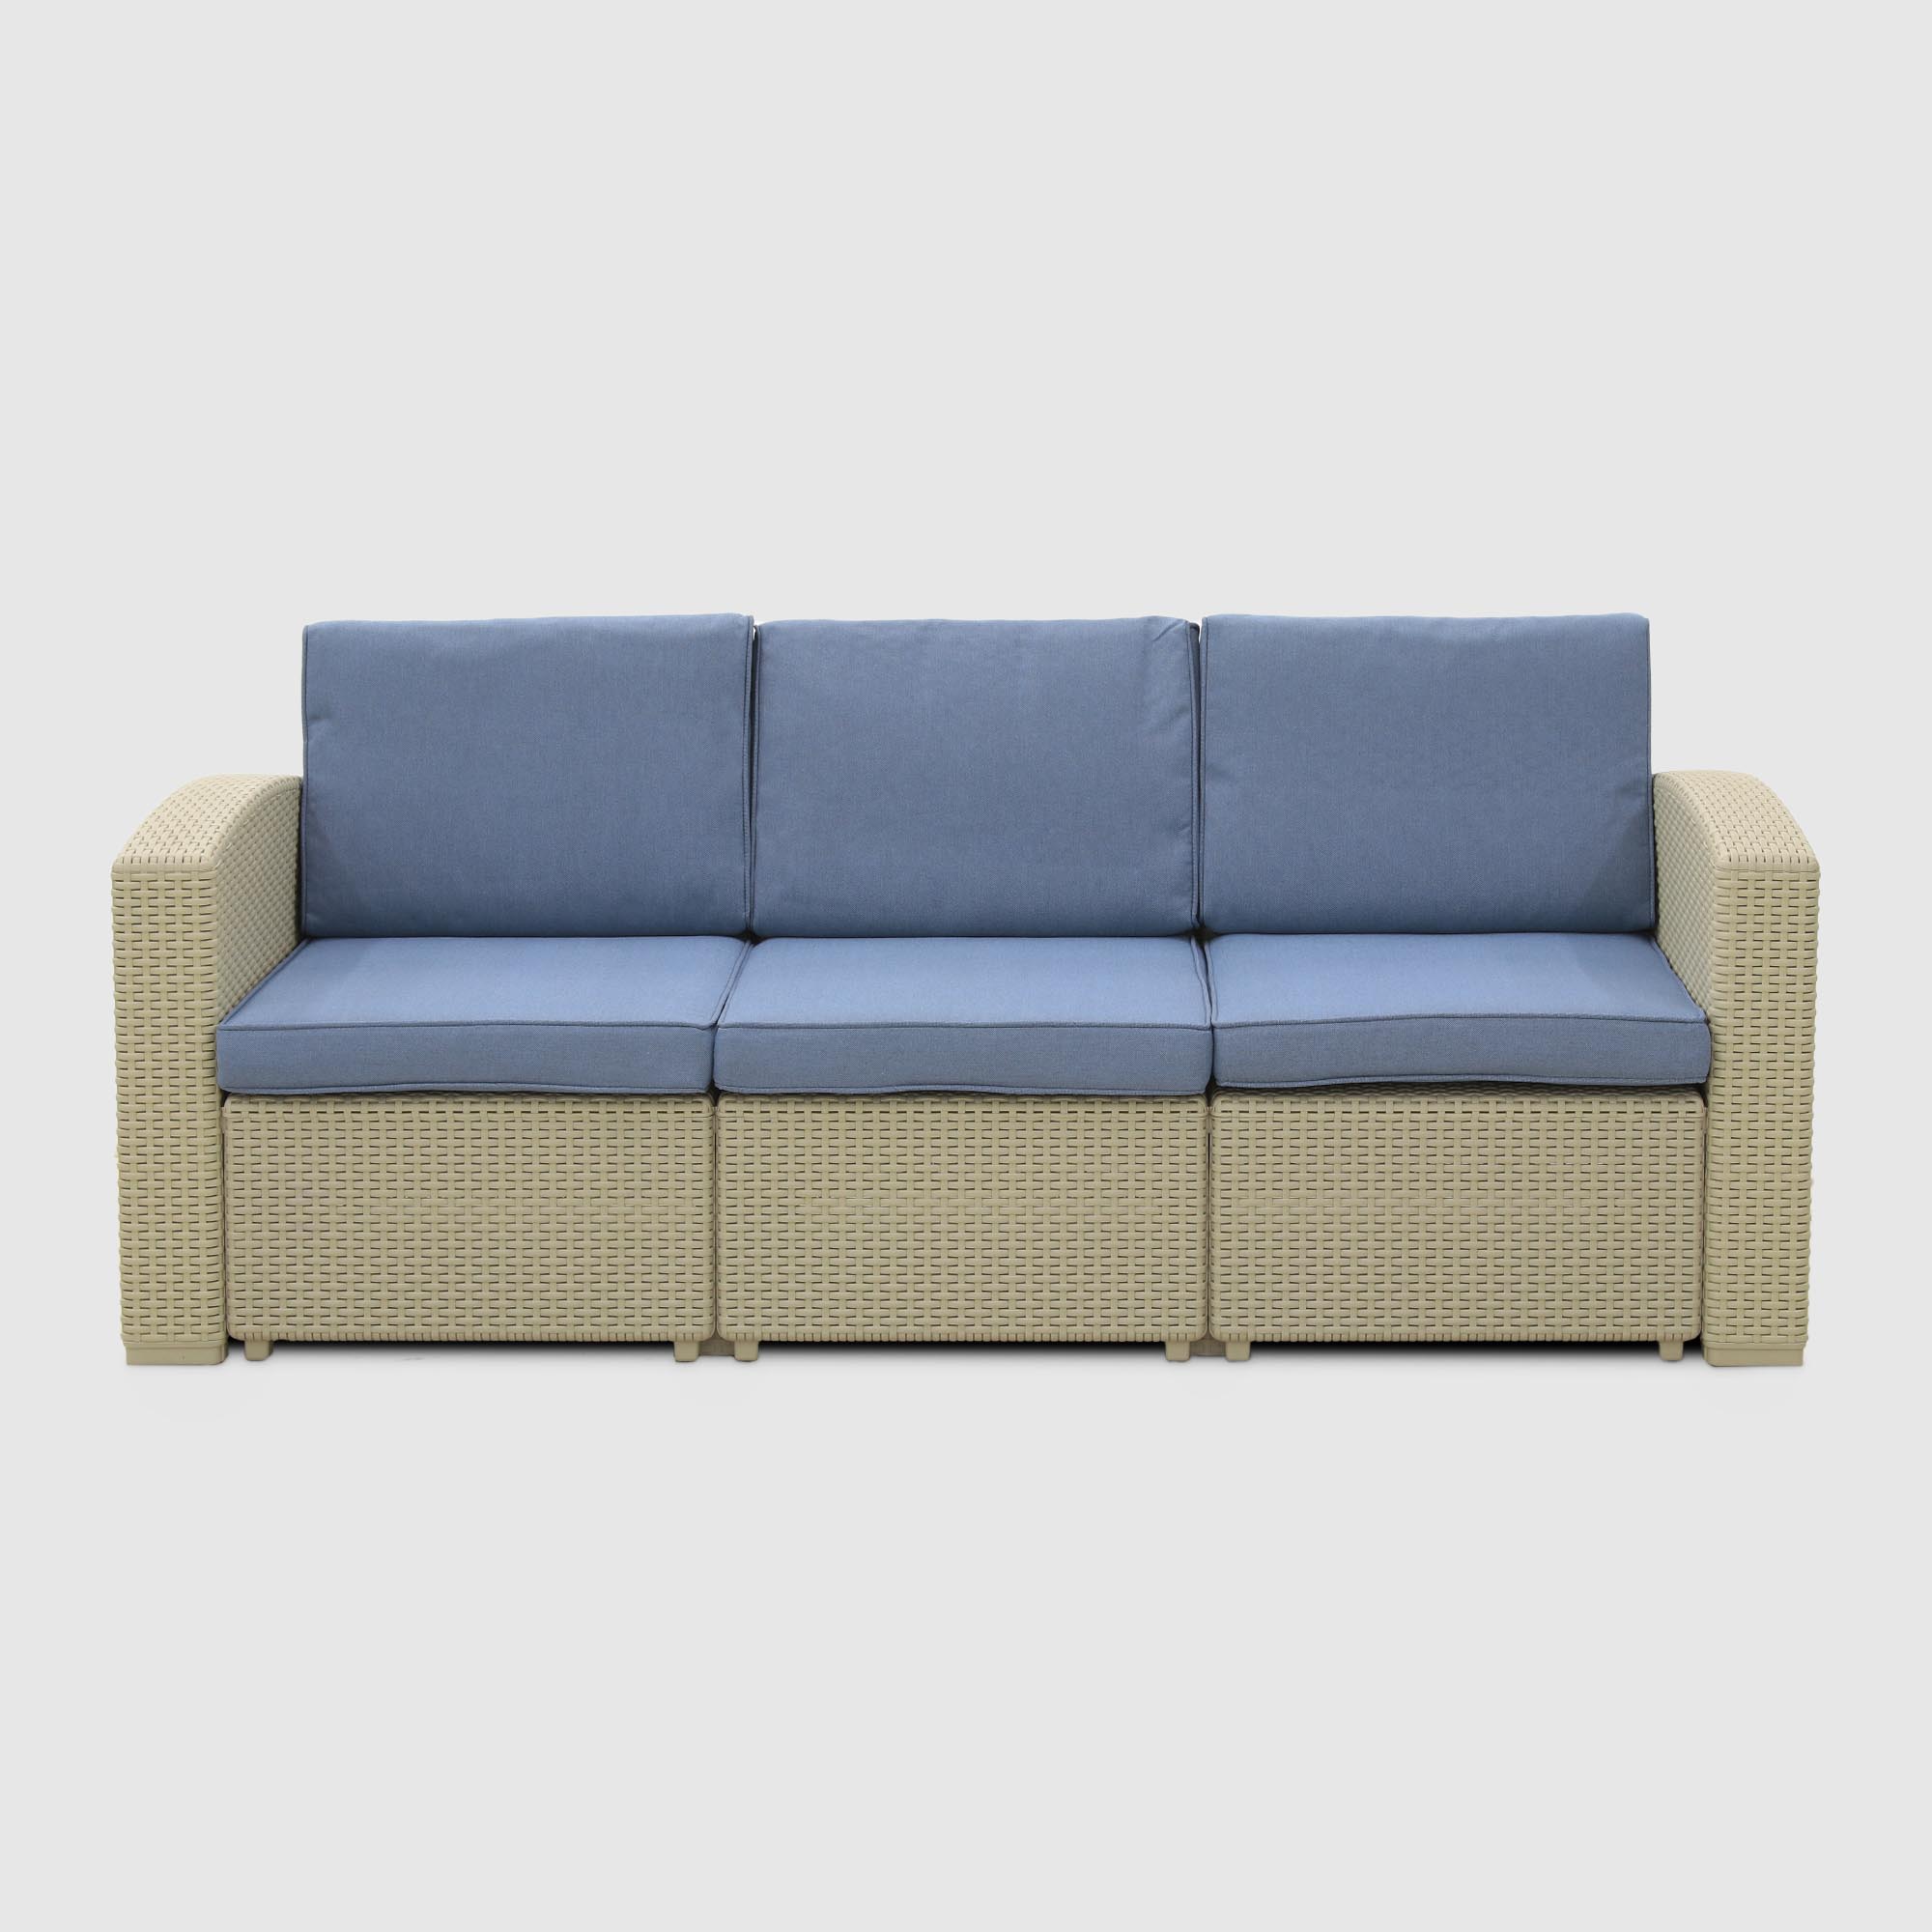 Комплект мебели LF стол+софа 3-х местная+2 кресла+тумбочка серый, цвет синий, размер 199x75x71 - фото 4